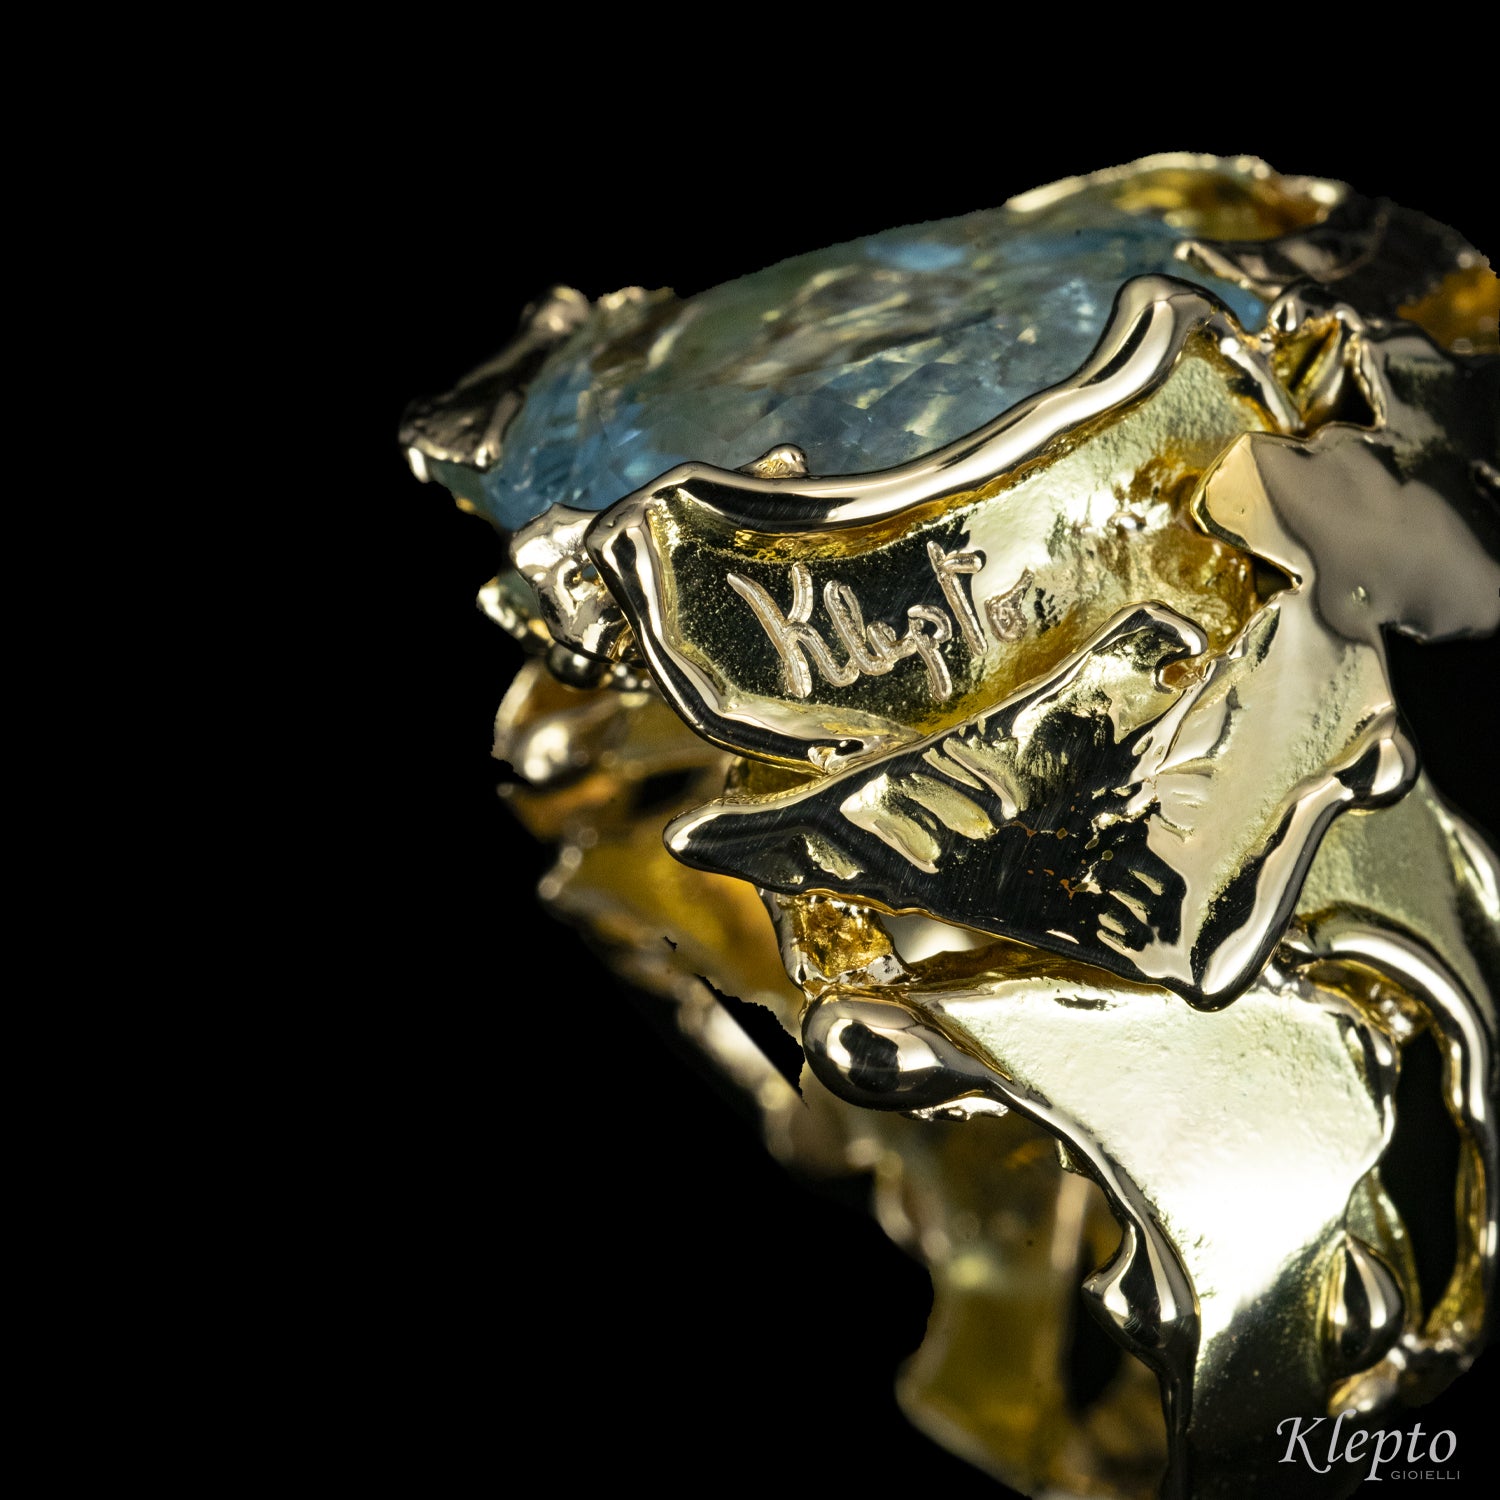 Yellow gold ring with Aquamarine